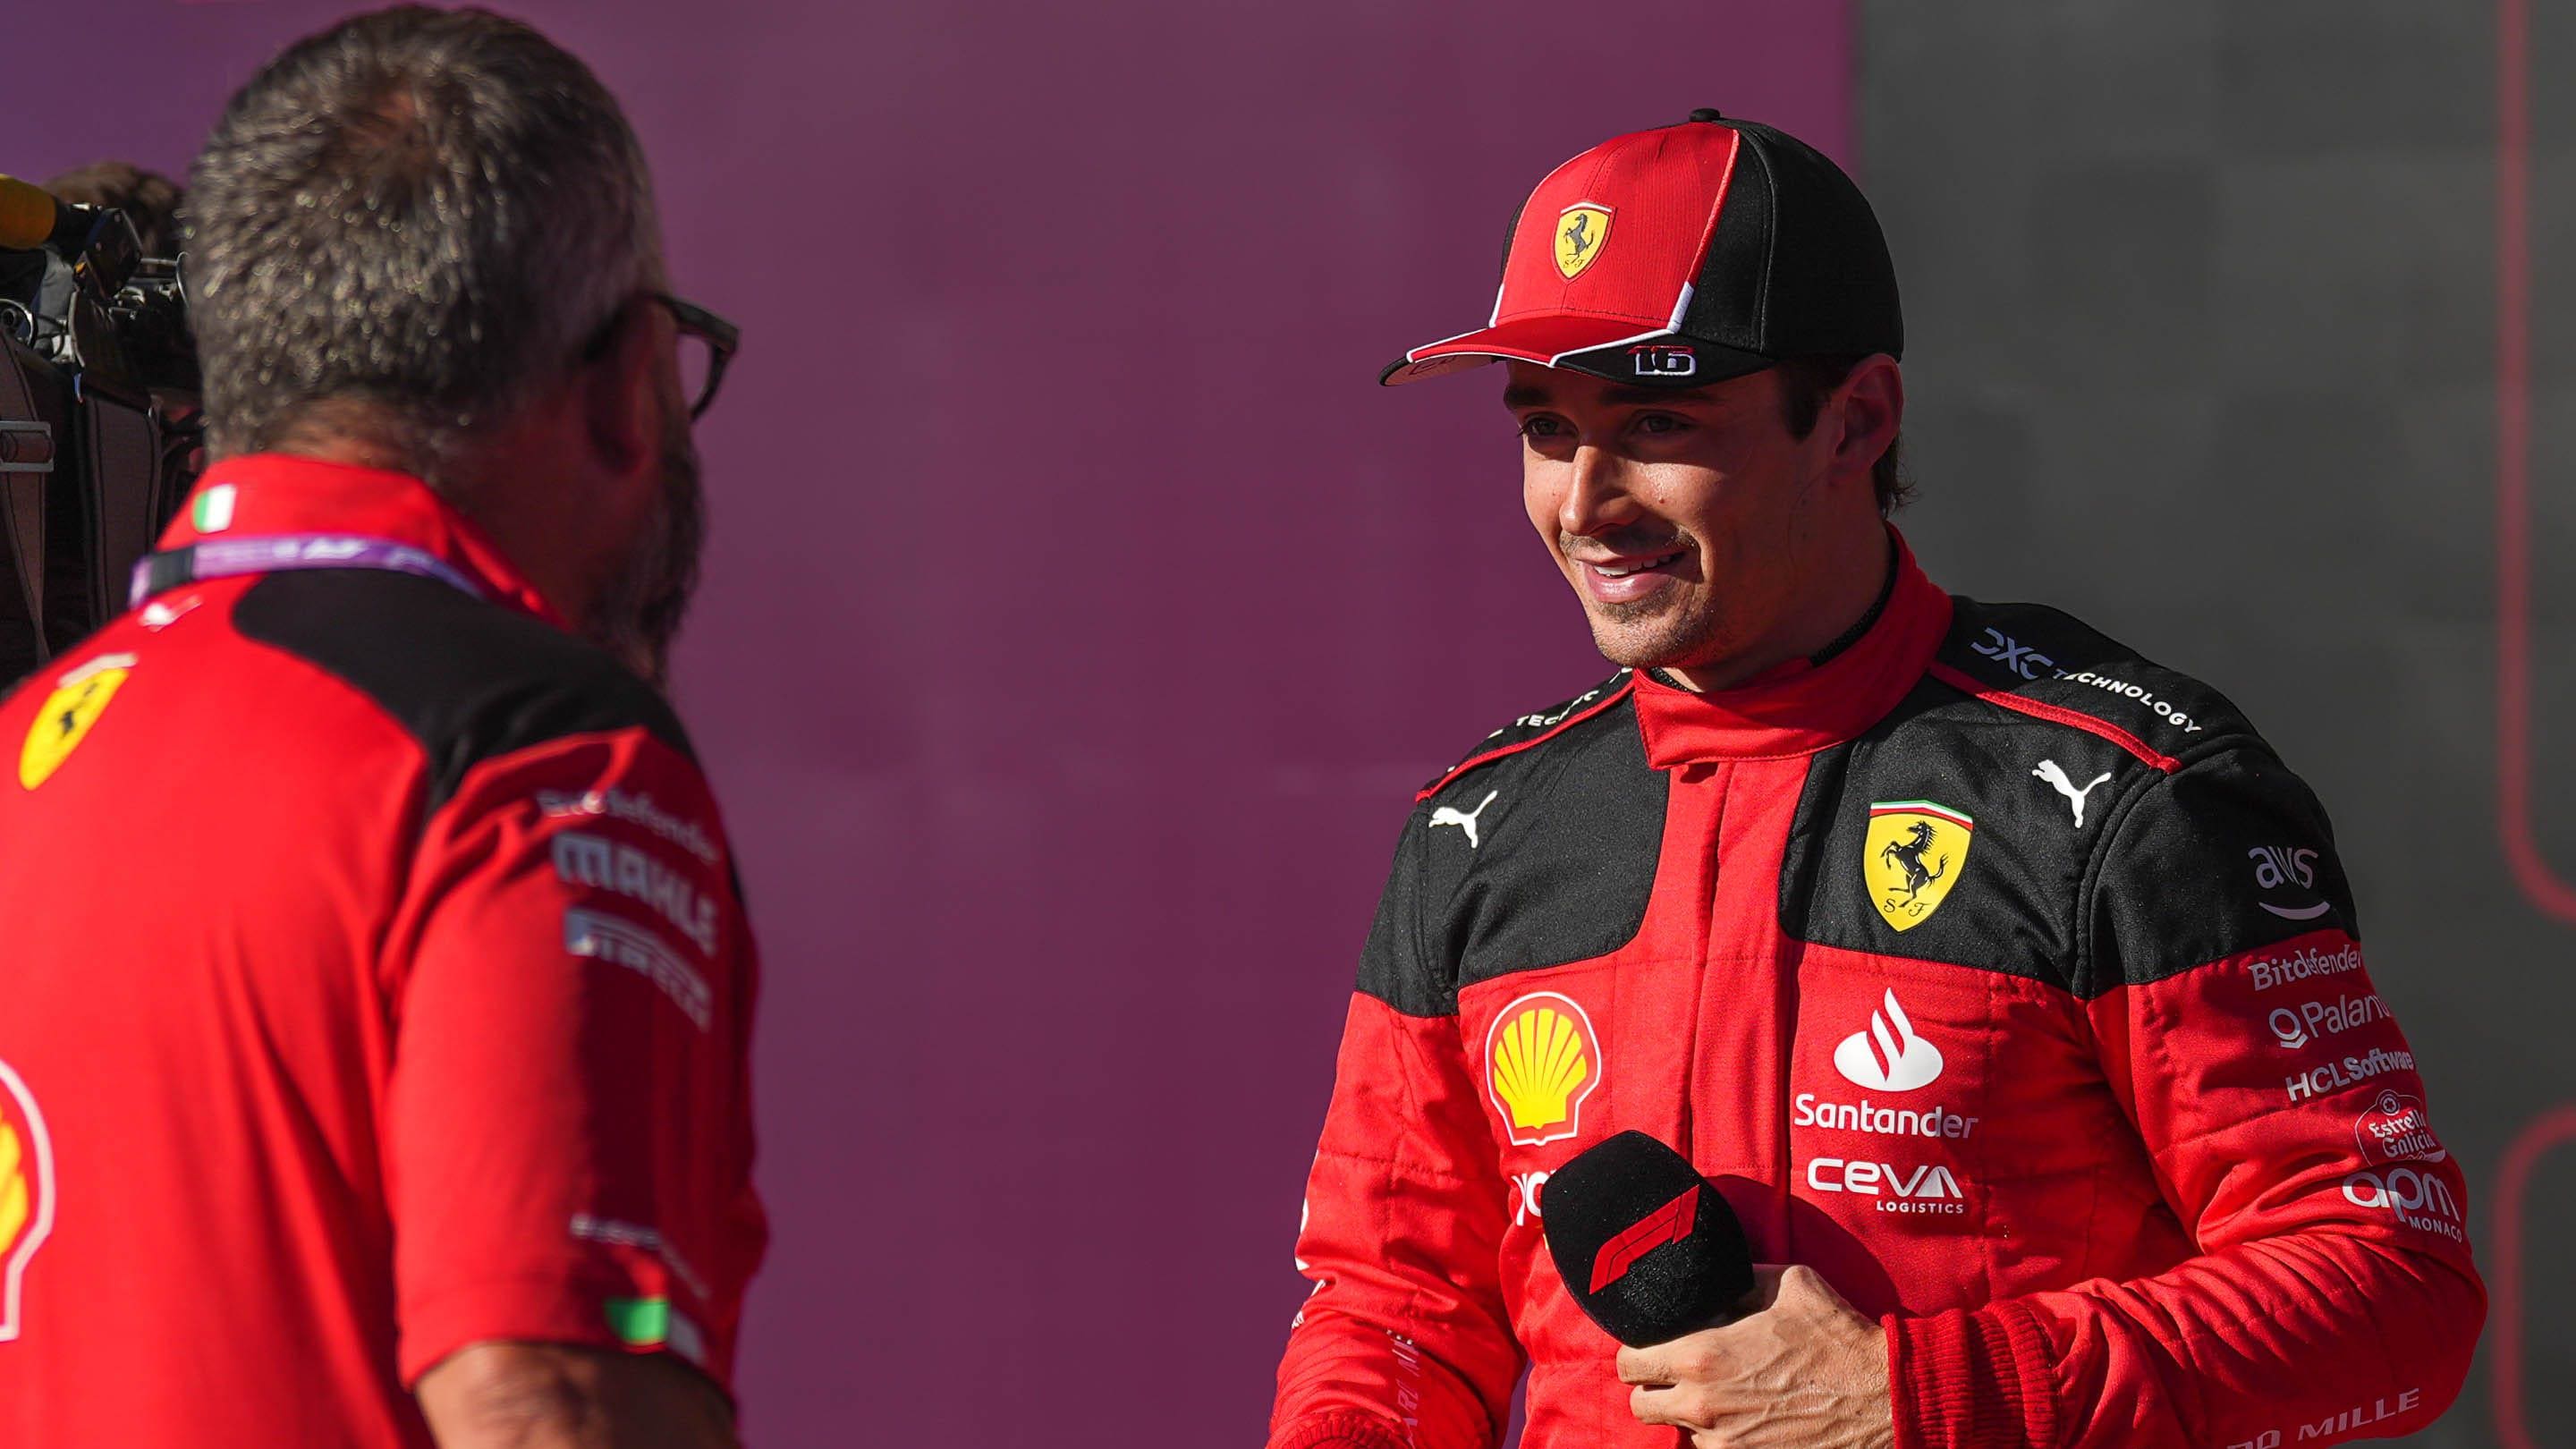 Race Car Champ Leclerc Swaps Helmet for Scoops: Ferrari Driver Launches Ice Cream Shop in Milan